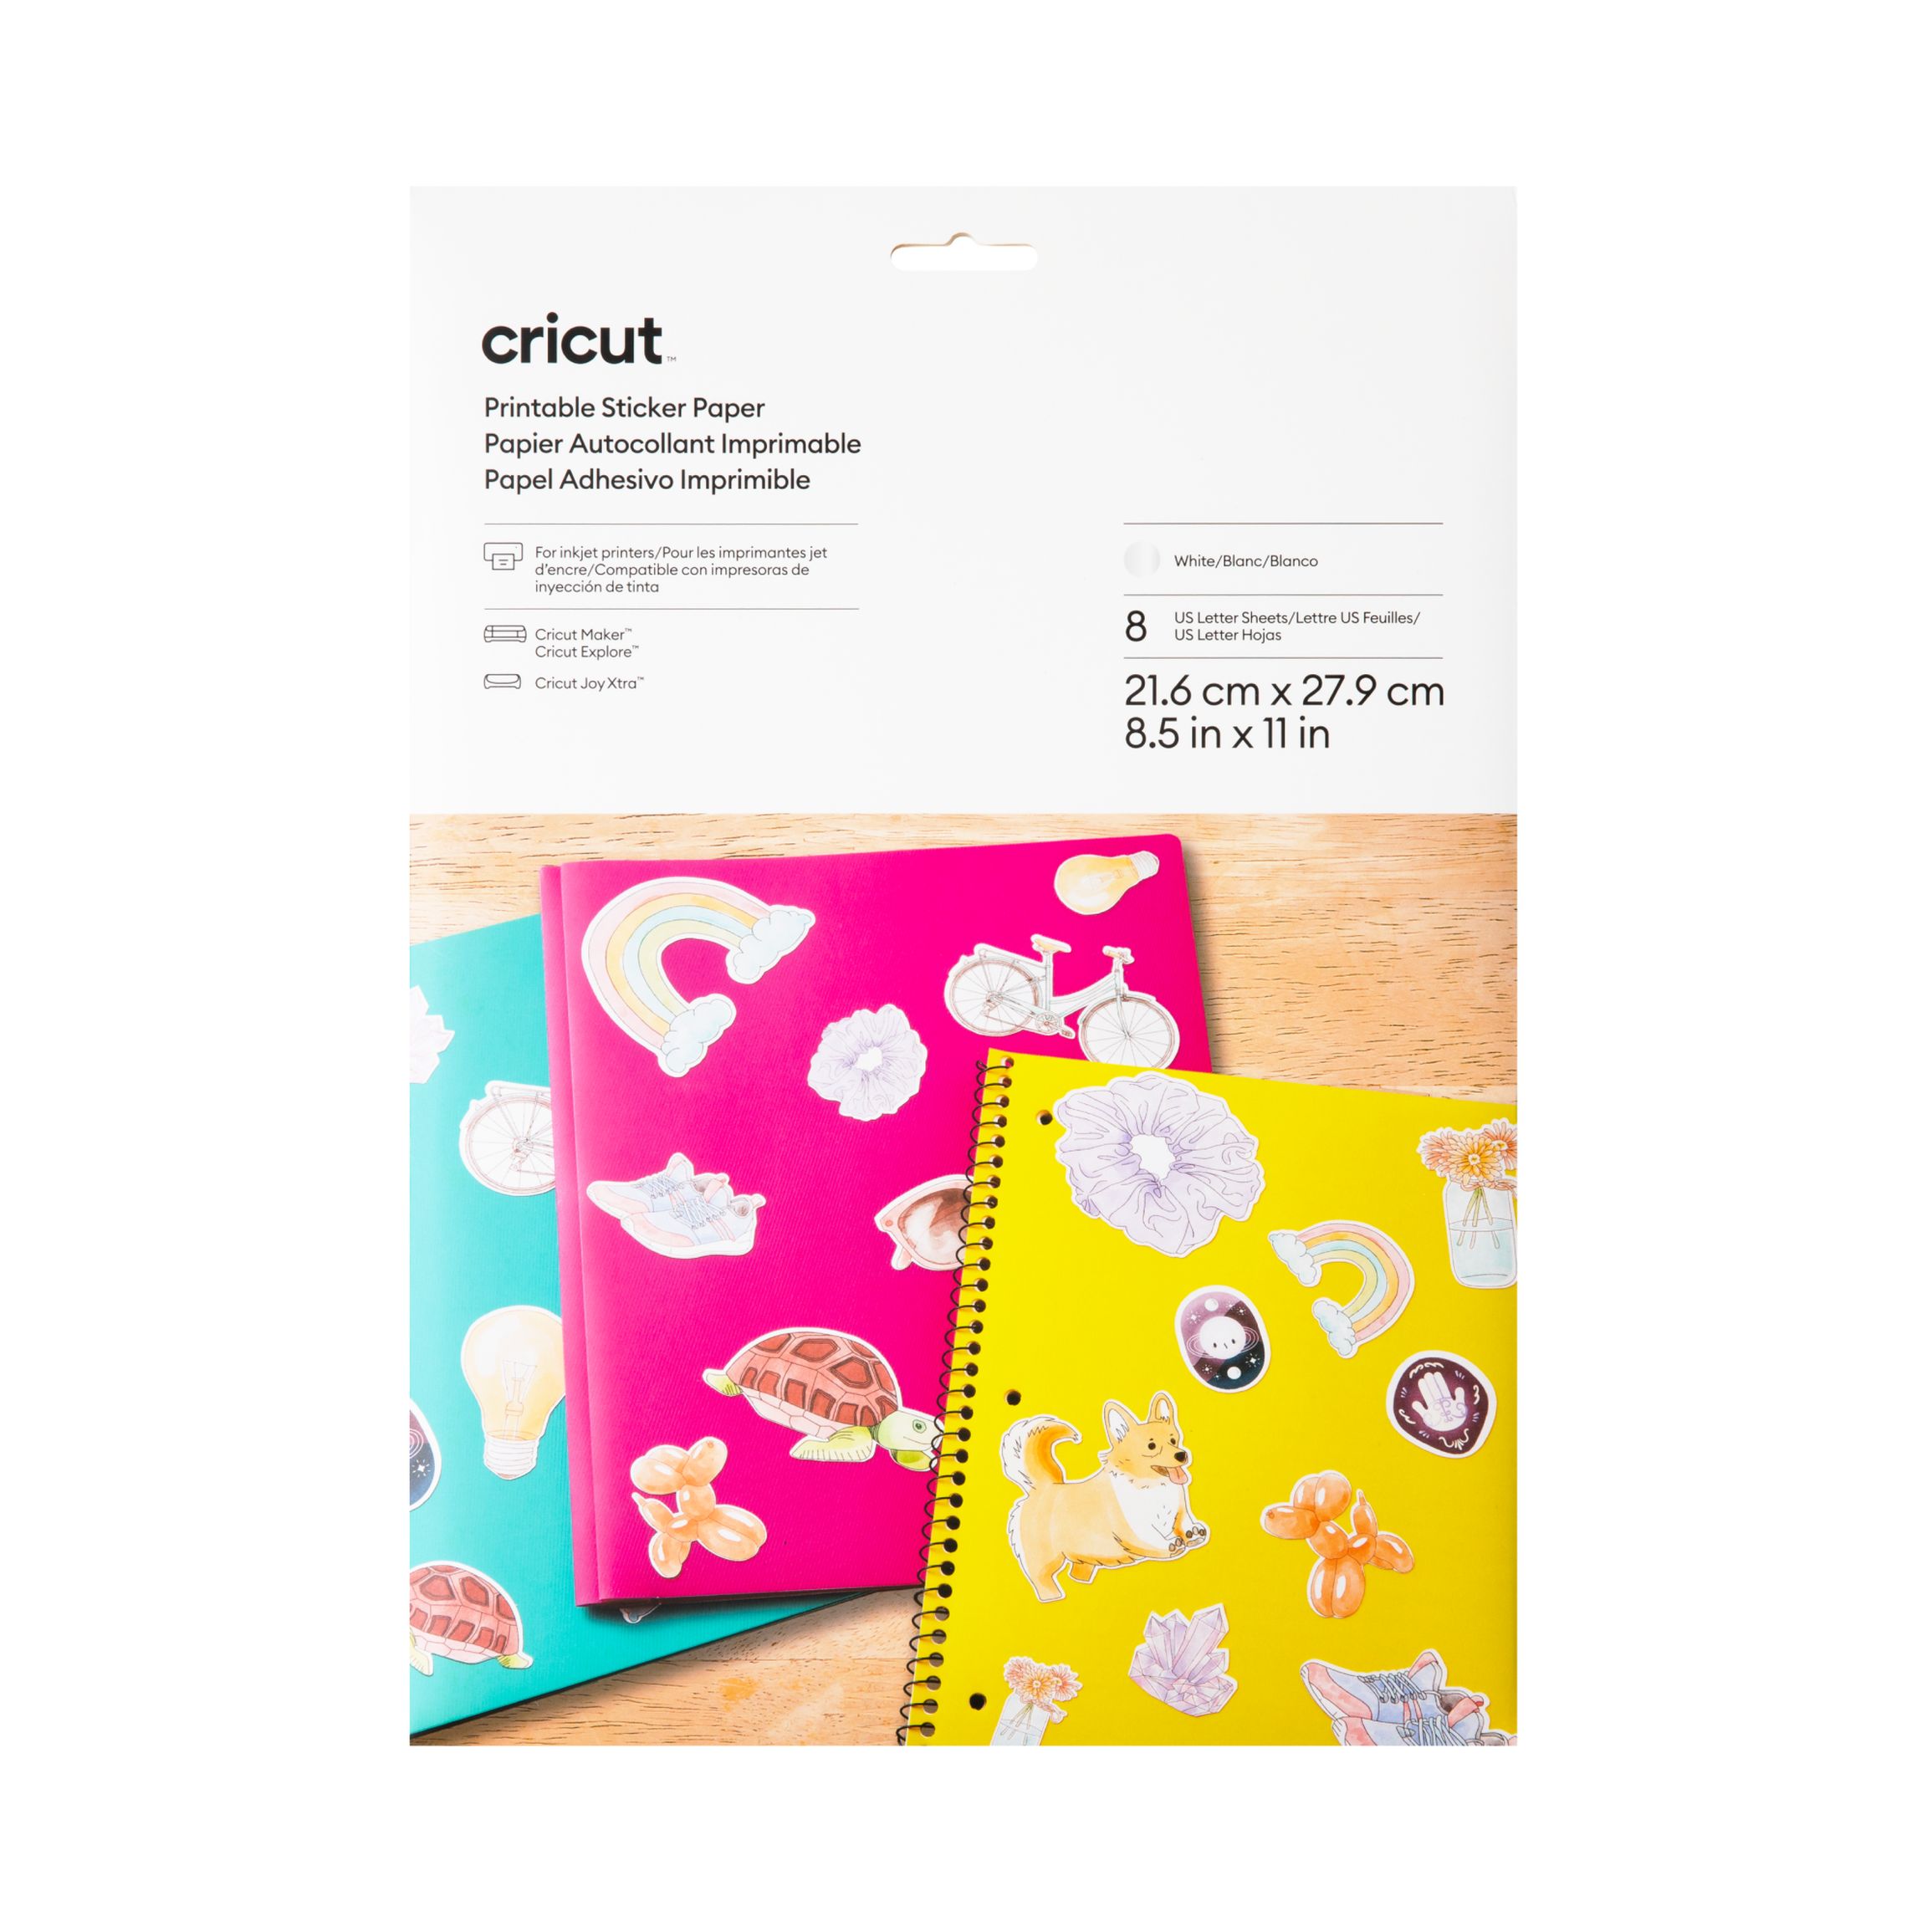 Printable Sticker Paper - US Letter (8 ct) | Cricut